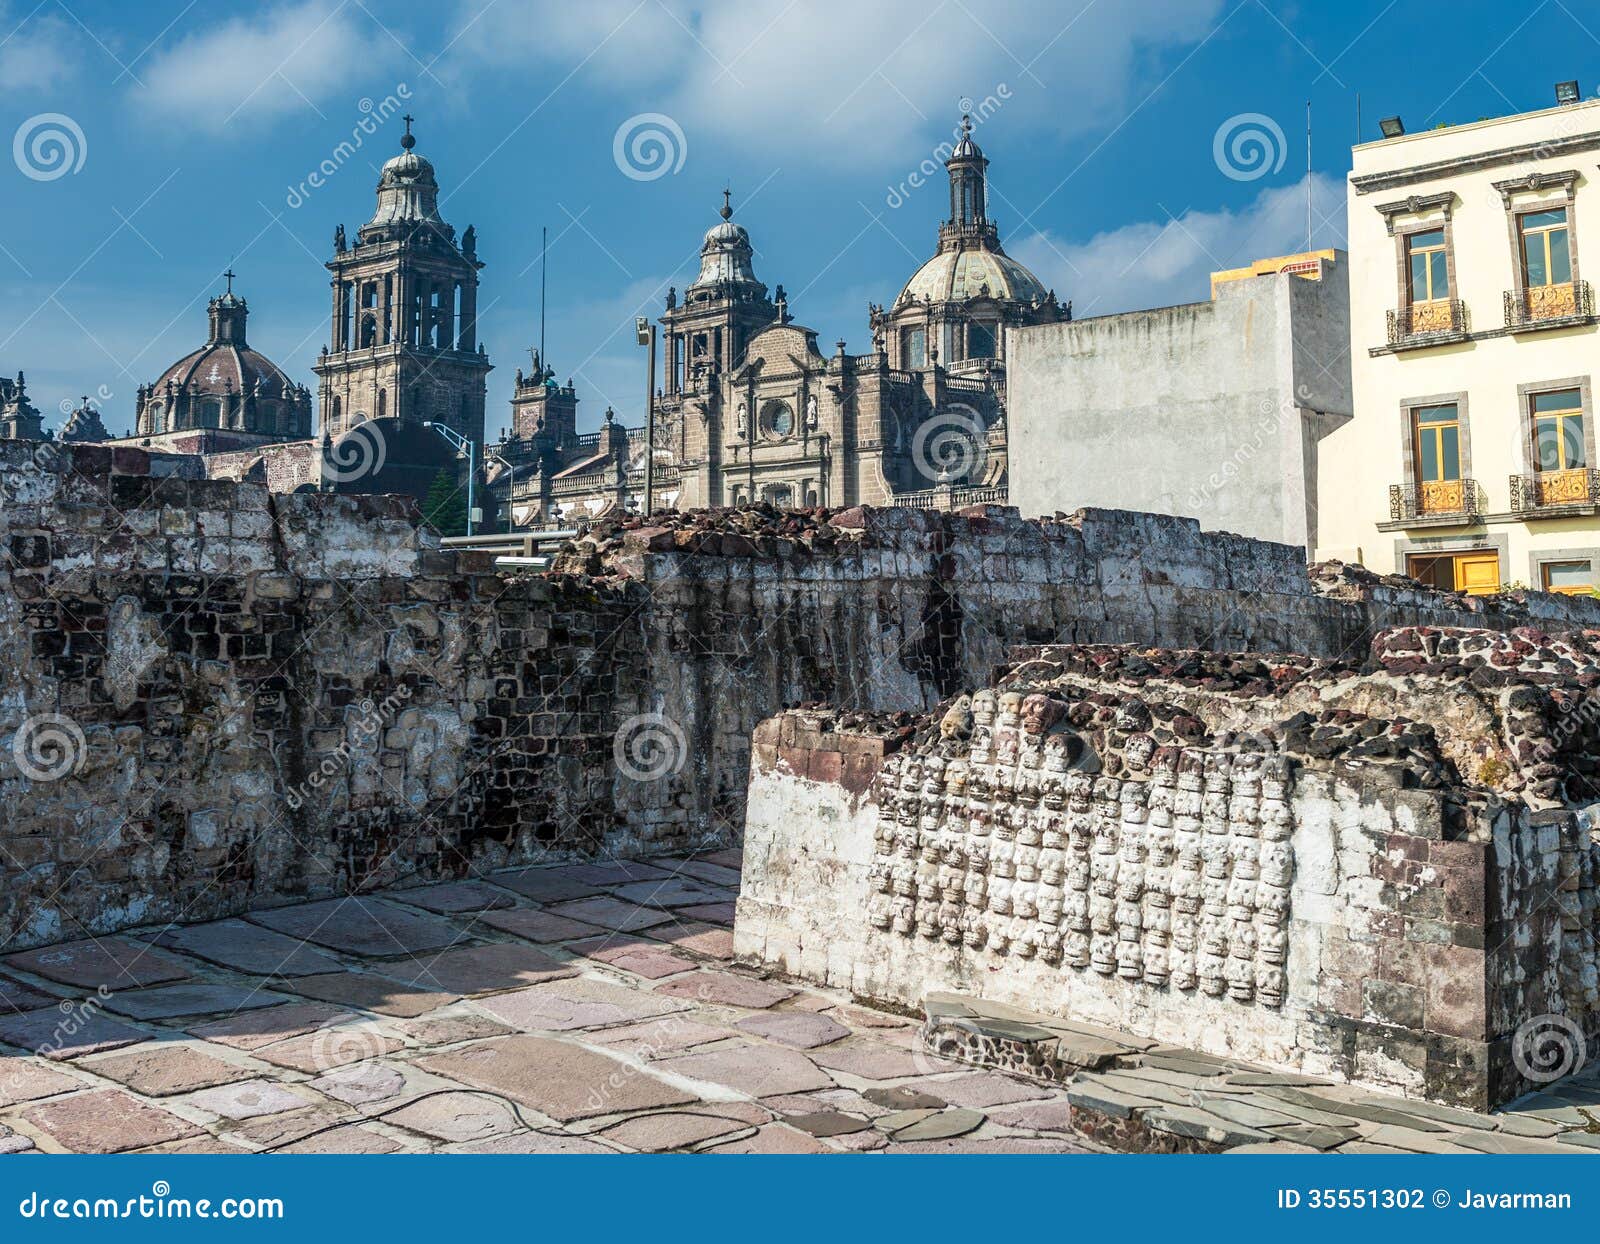 templo mayor, the historic center of mexico city